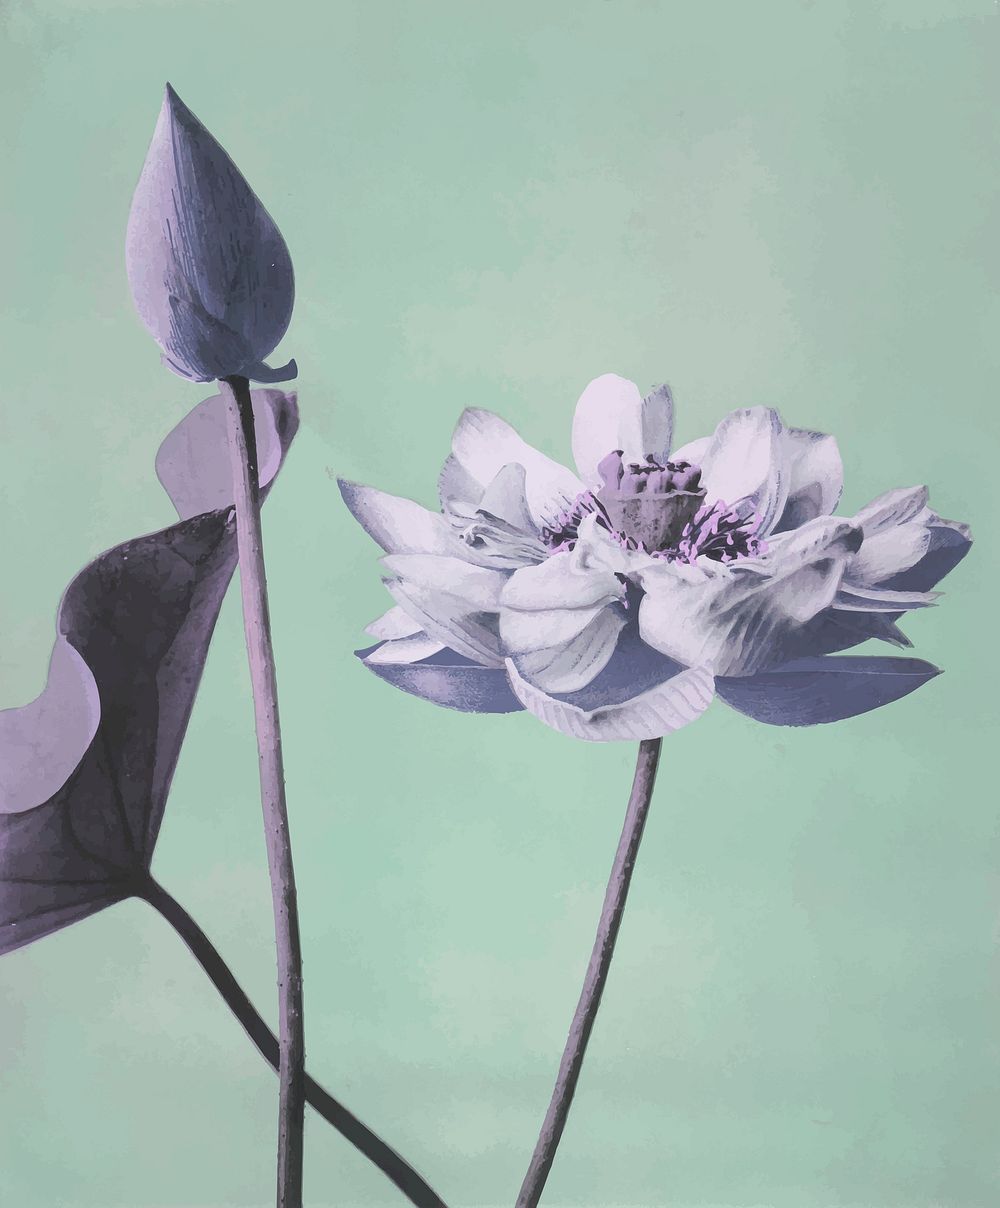 Lotus flowers vintage illustration vector, remix from original painting by Ogawa Kazumasa.